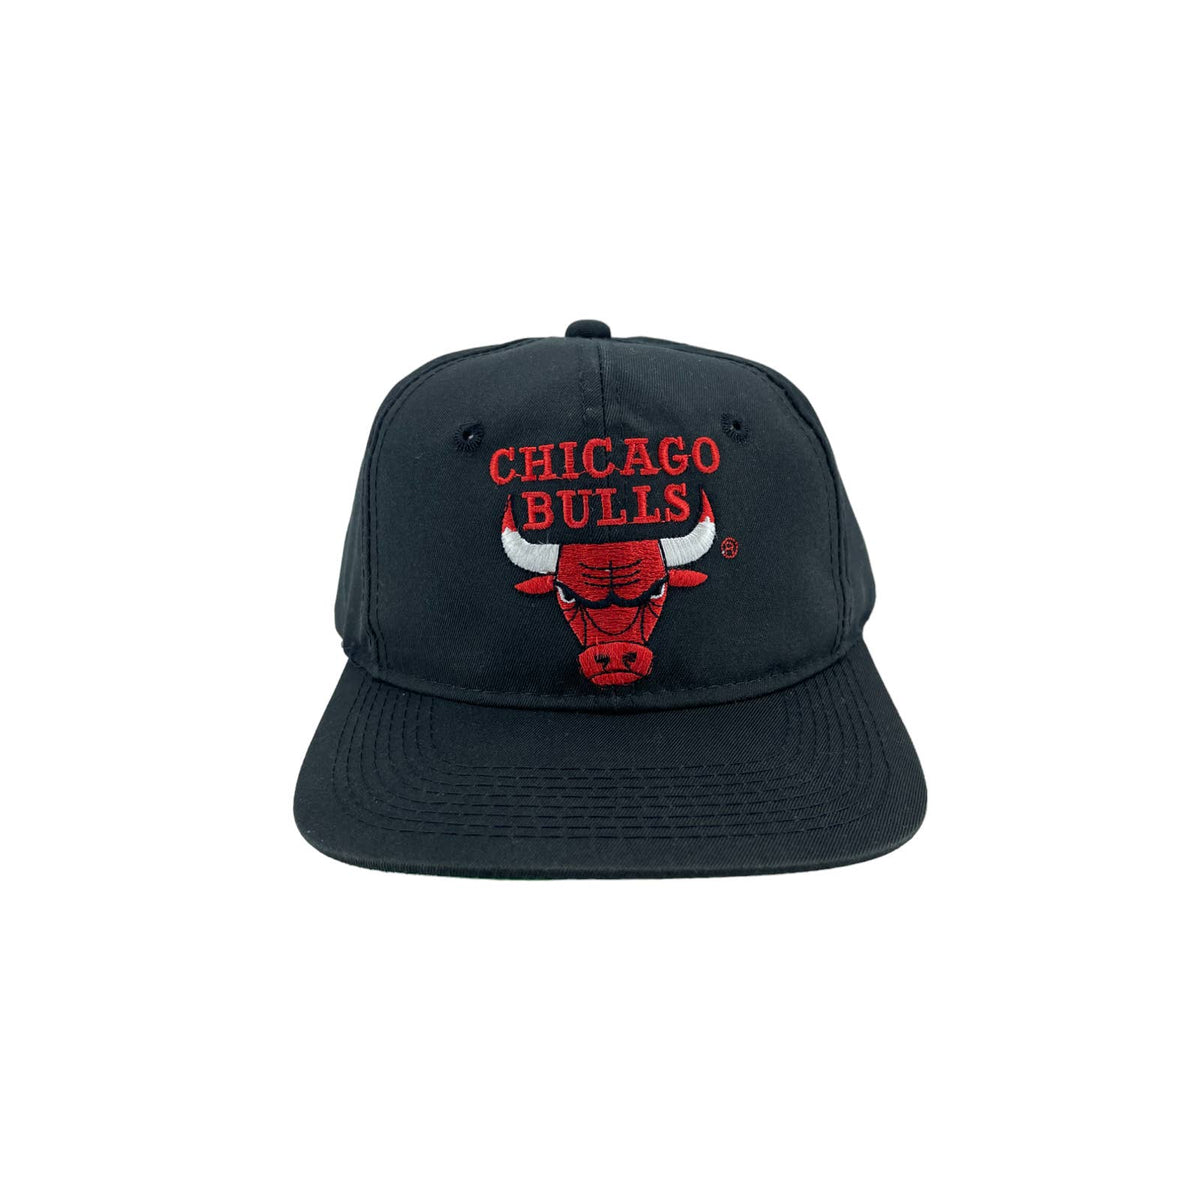 Vintage 1990's Chicago Bulls The G Cap NBA Snapback Hat